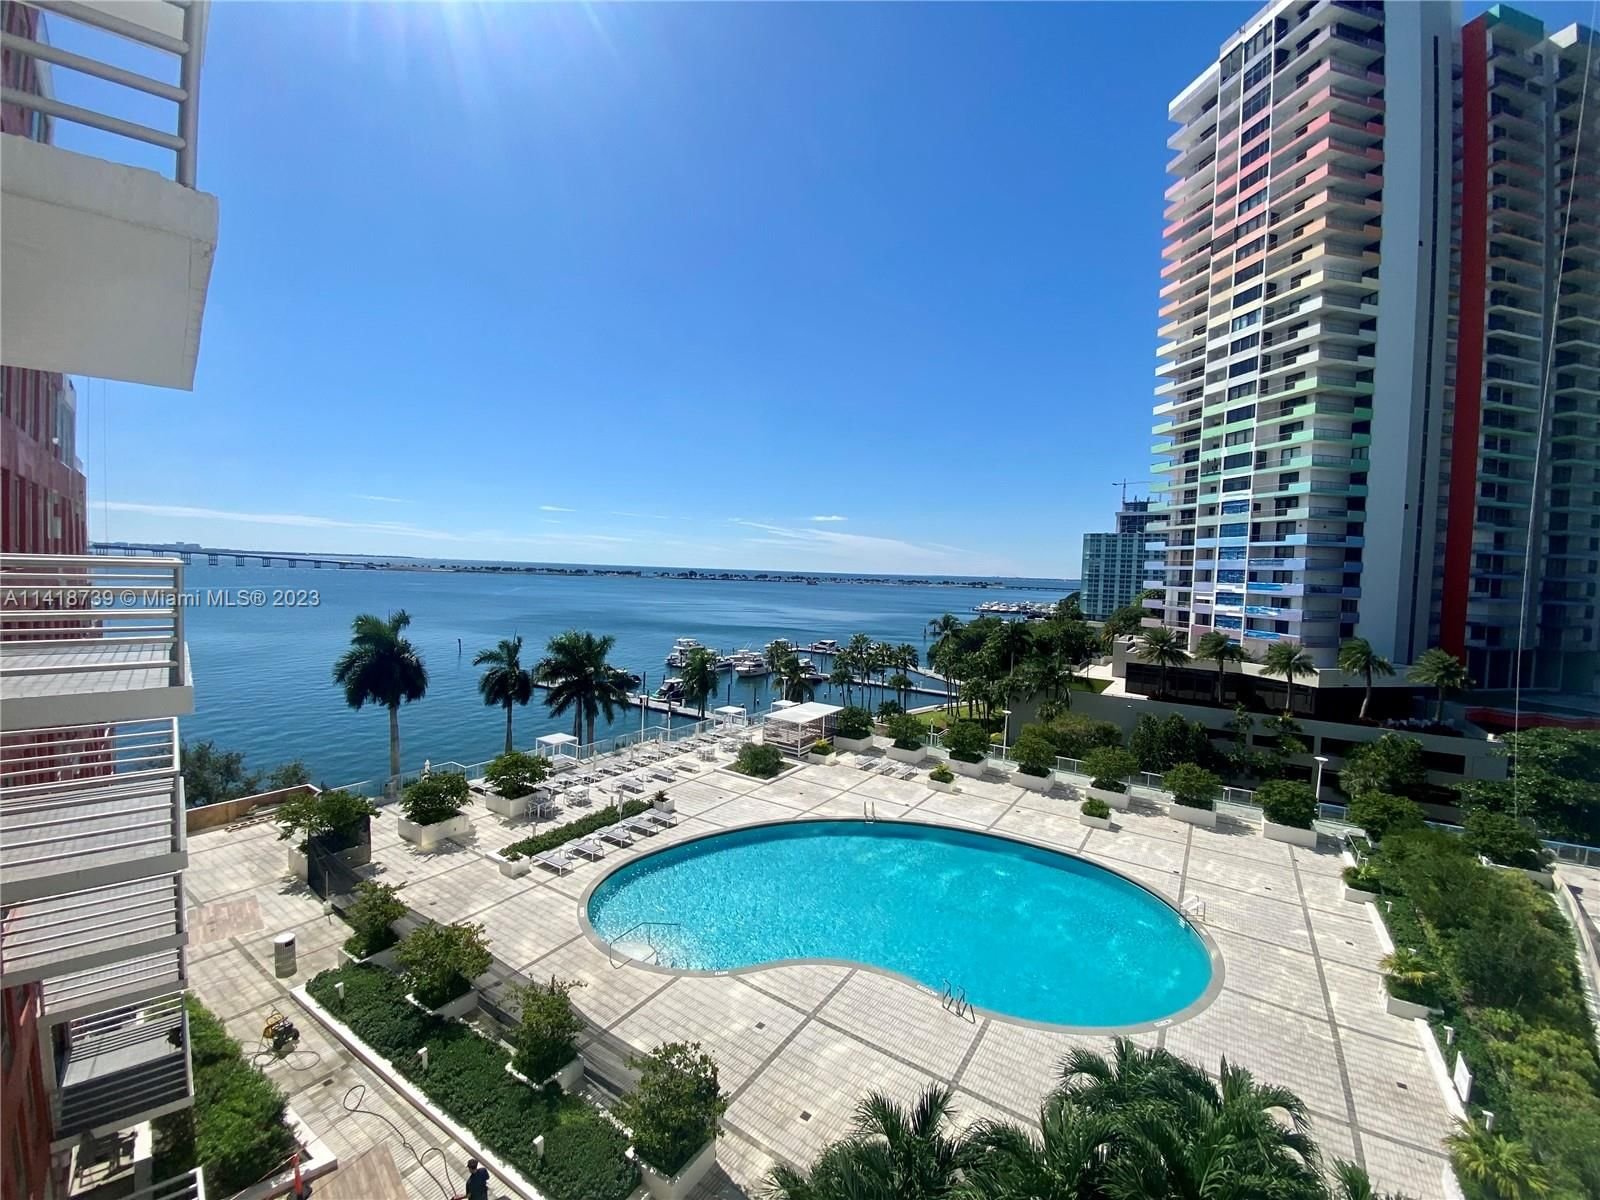 Real estate property located at 1541 Brickell Ave C807, Miami-Dade County, THE PALACE CONDO, Miami, FL